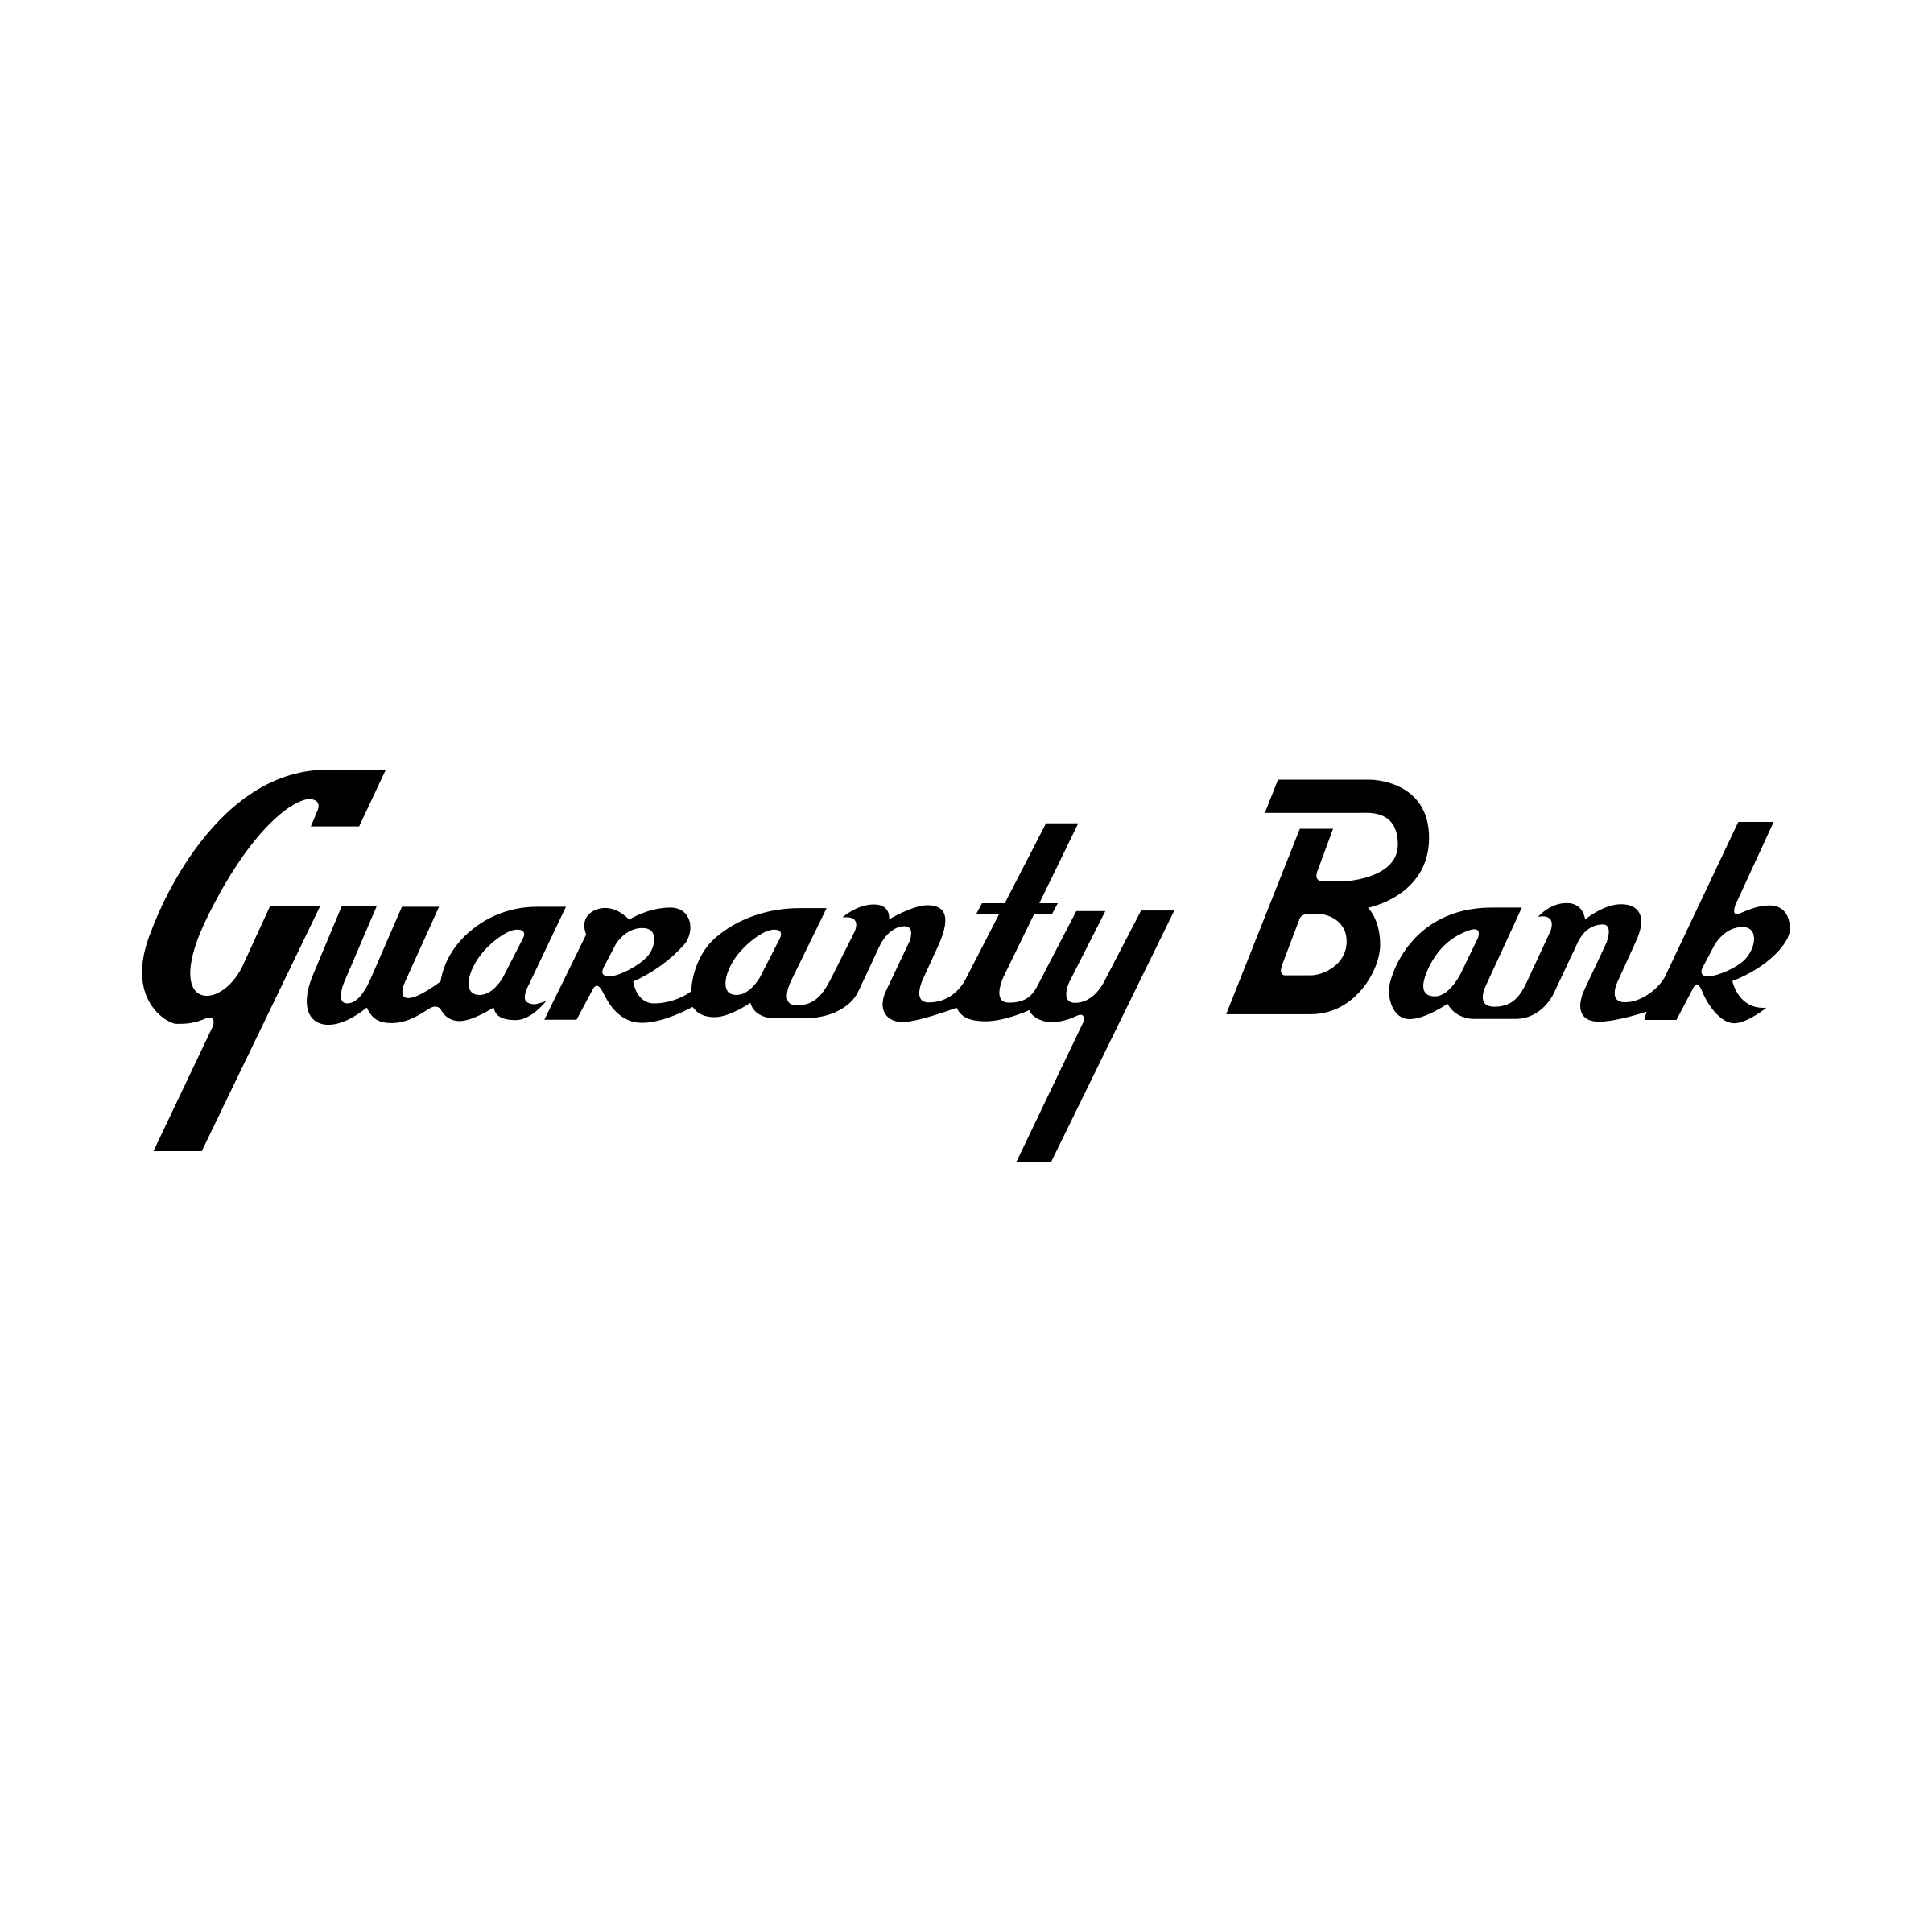 Www.guarantybank.com Logo - Guaranty Bank Logo PNG Transparent & SVG Vector - Freebie Supply